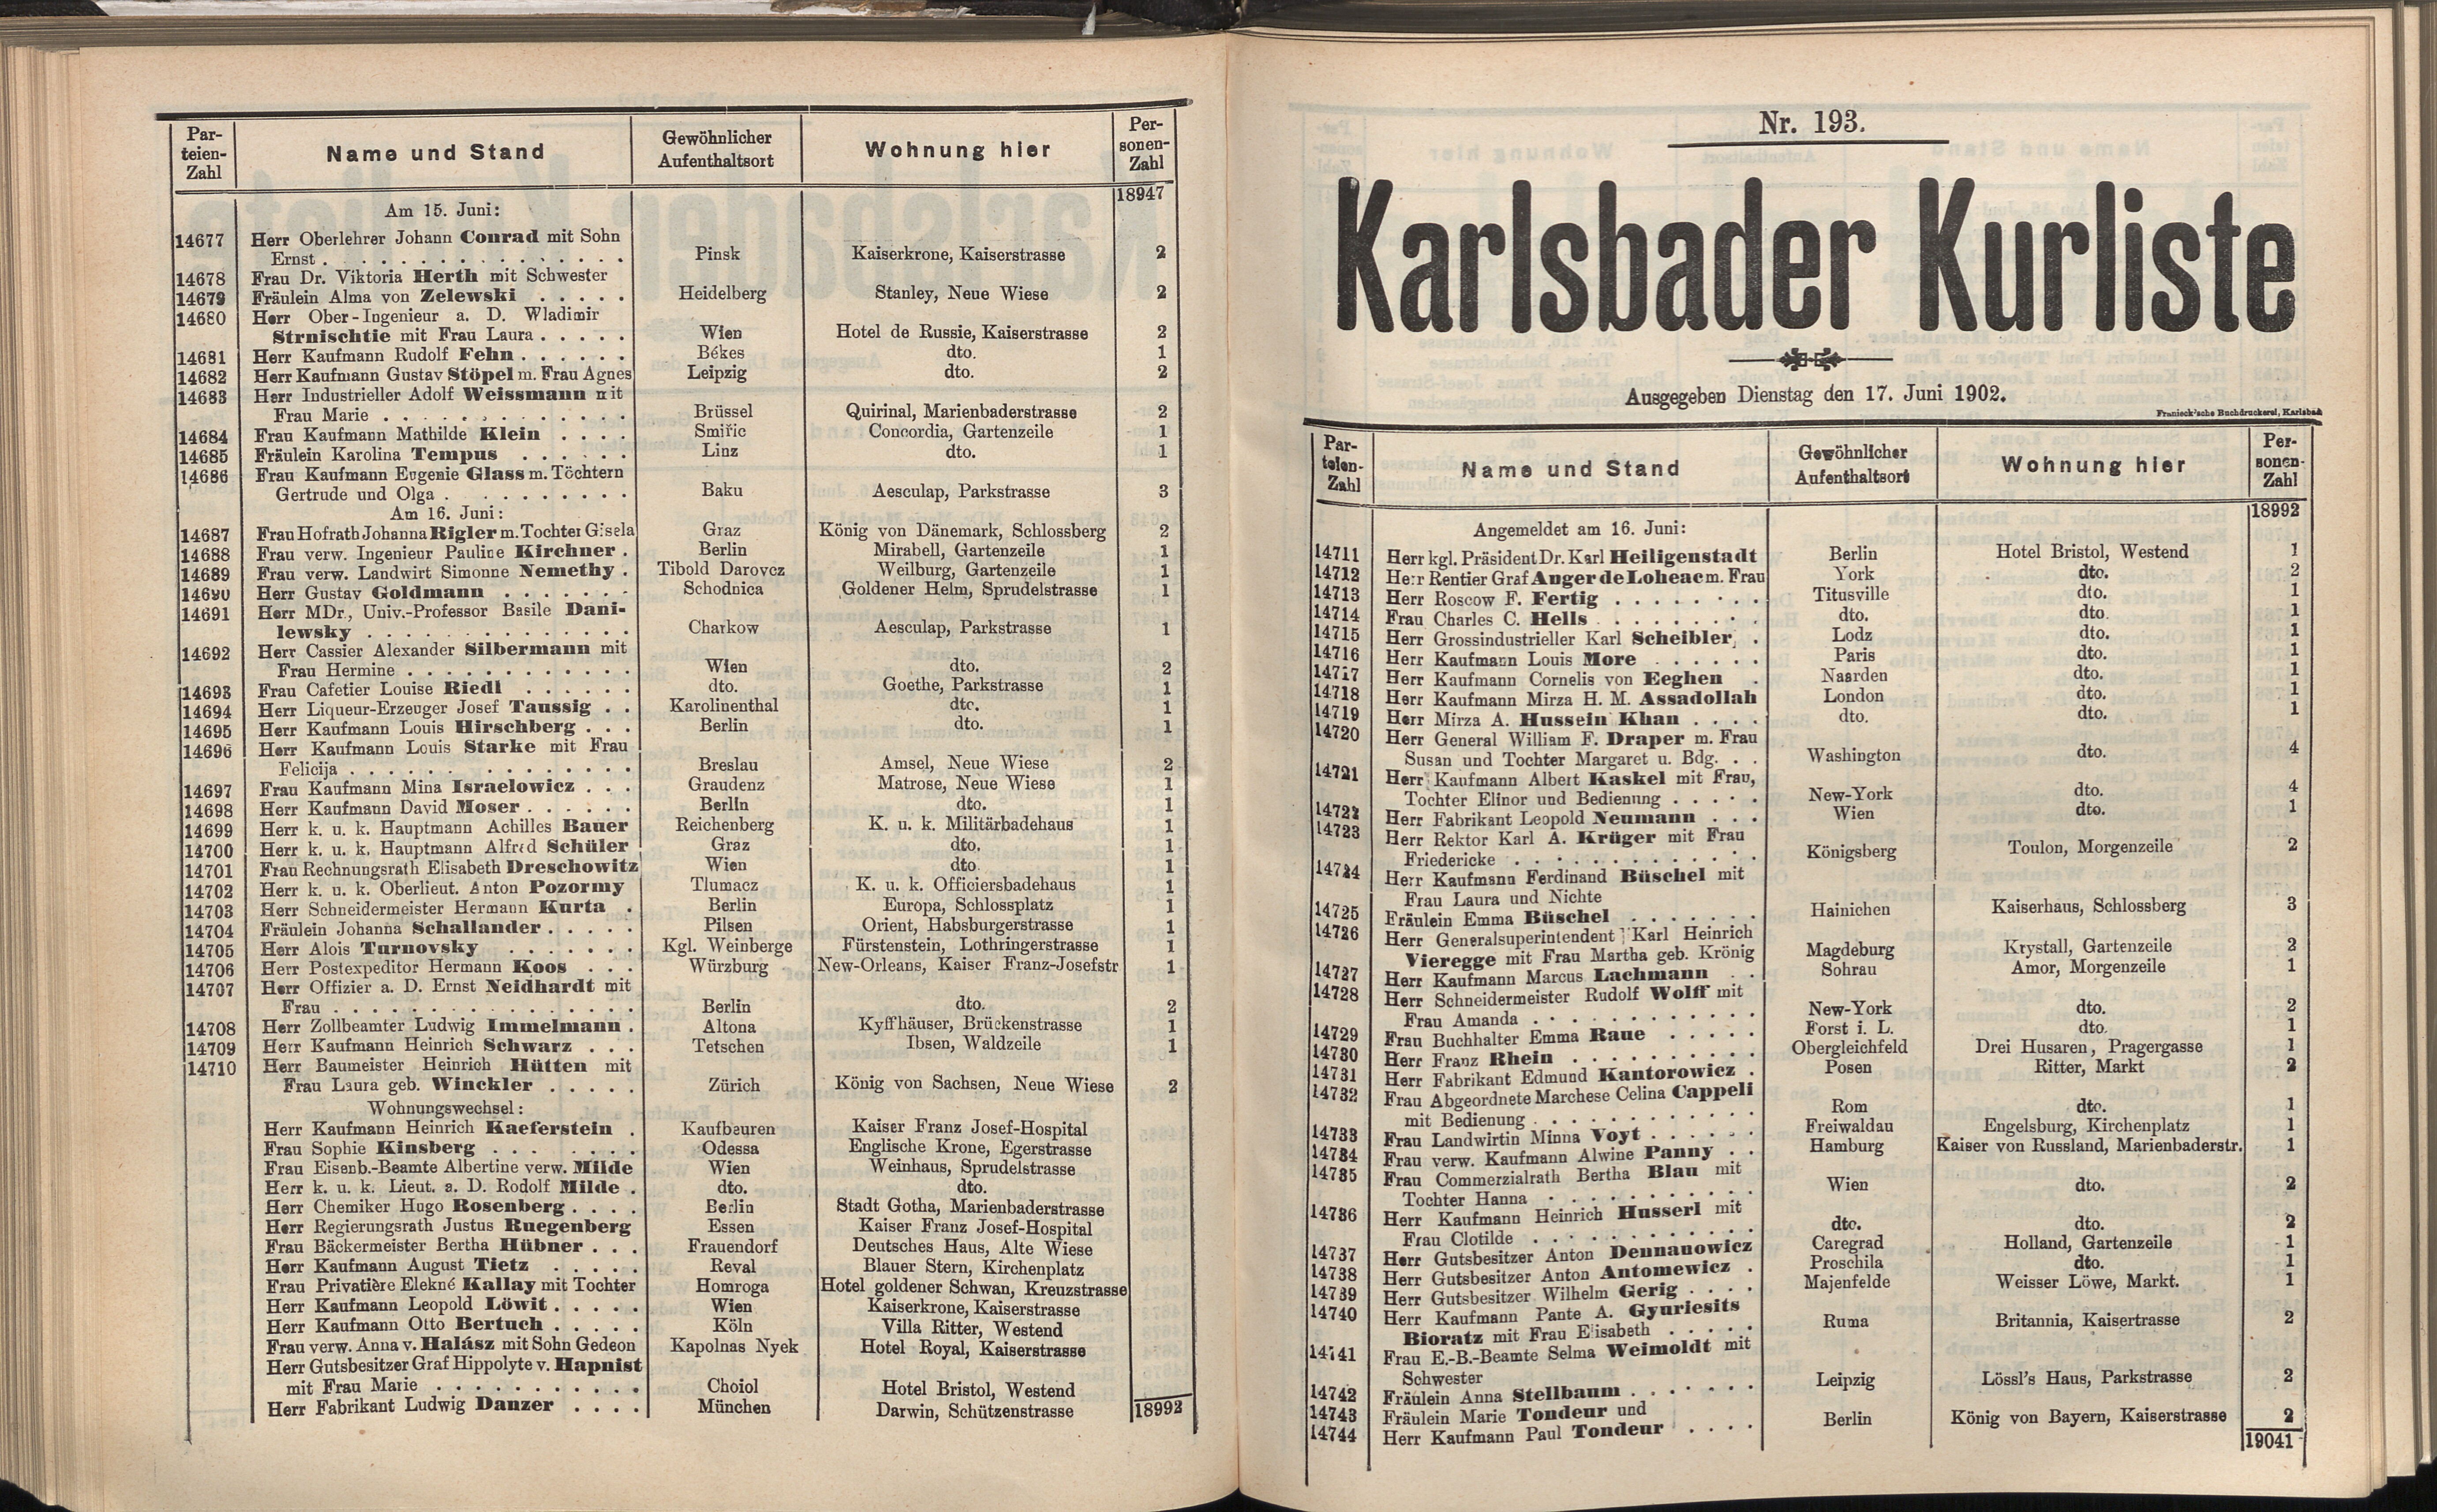 217. soap-kv_knihovna_karlsbader-kurliste-1902_2180